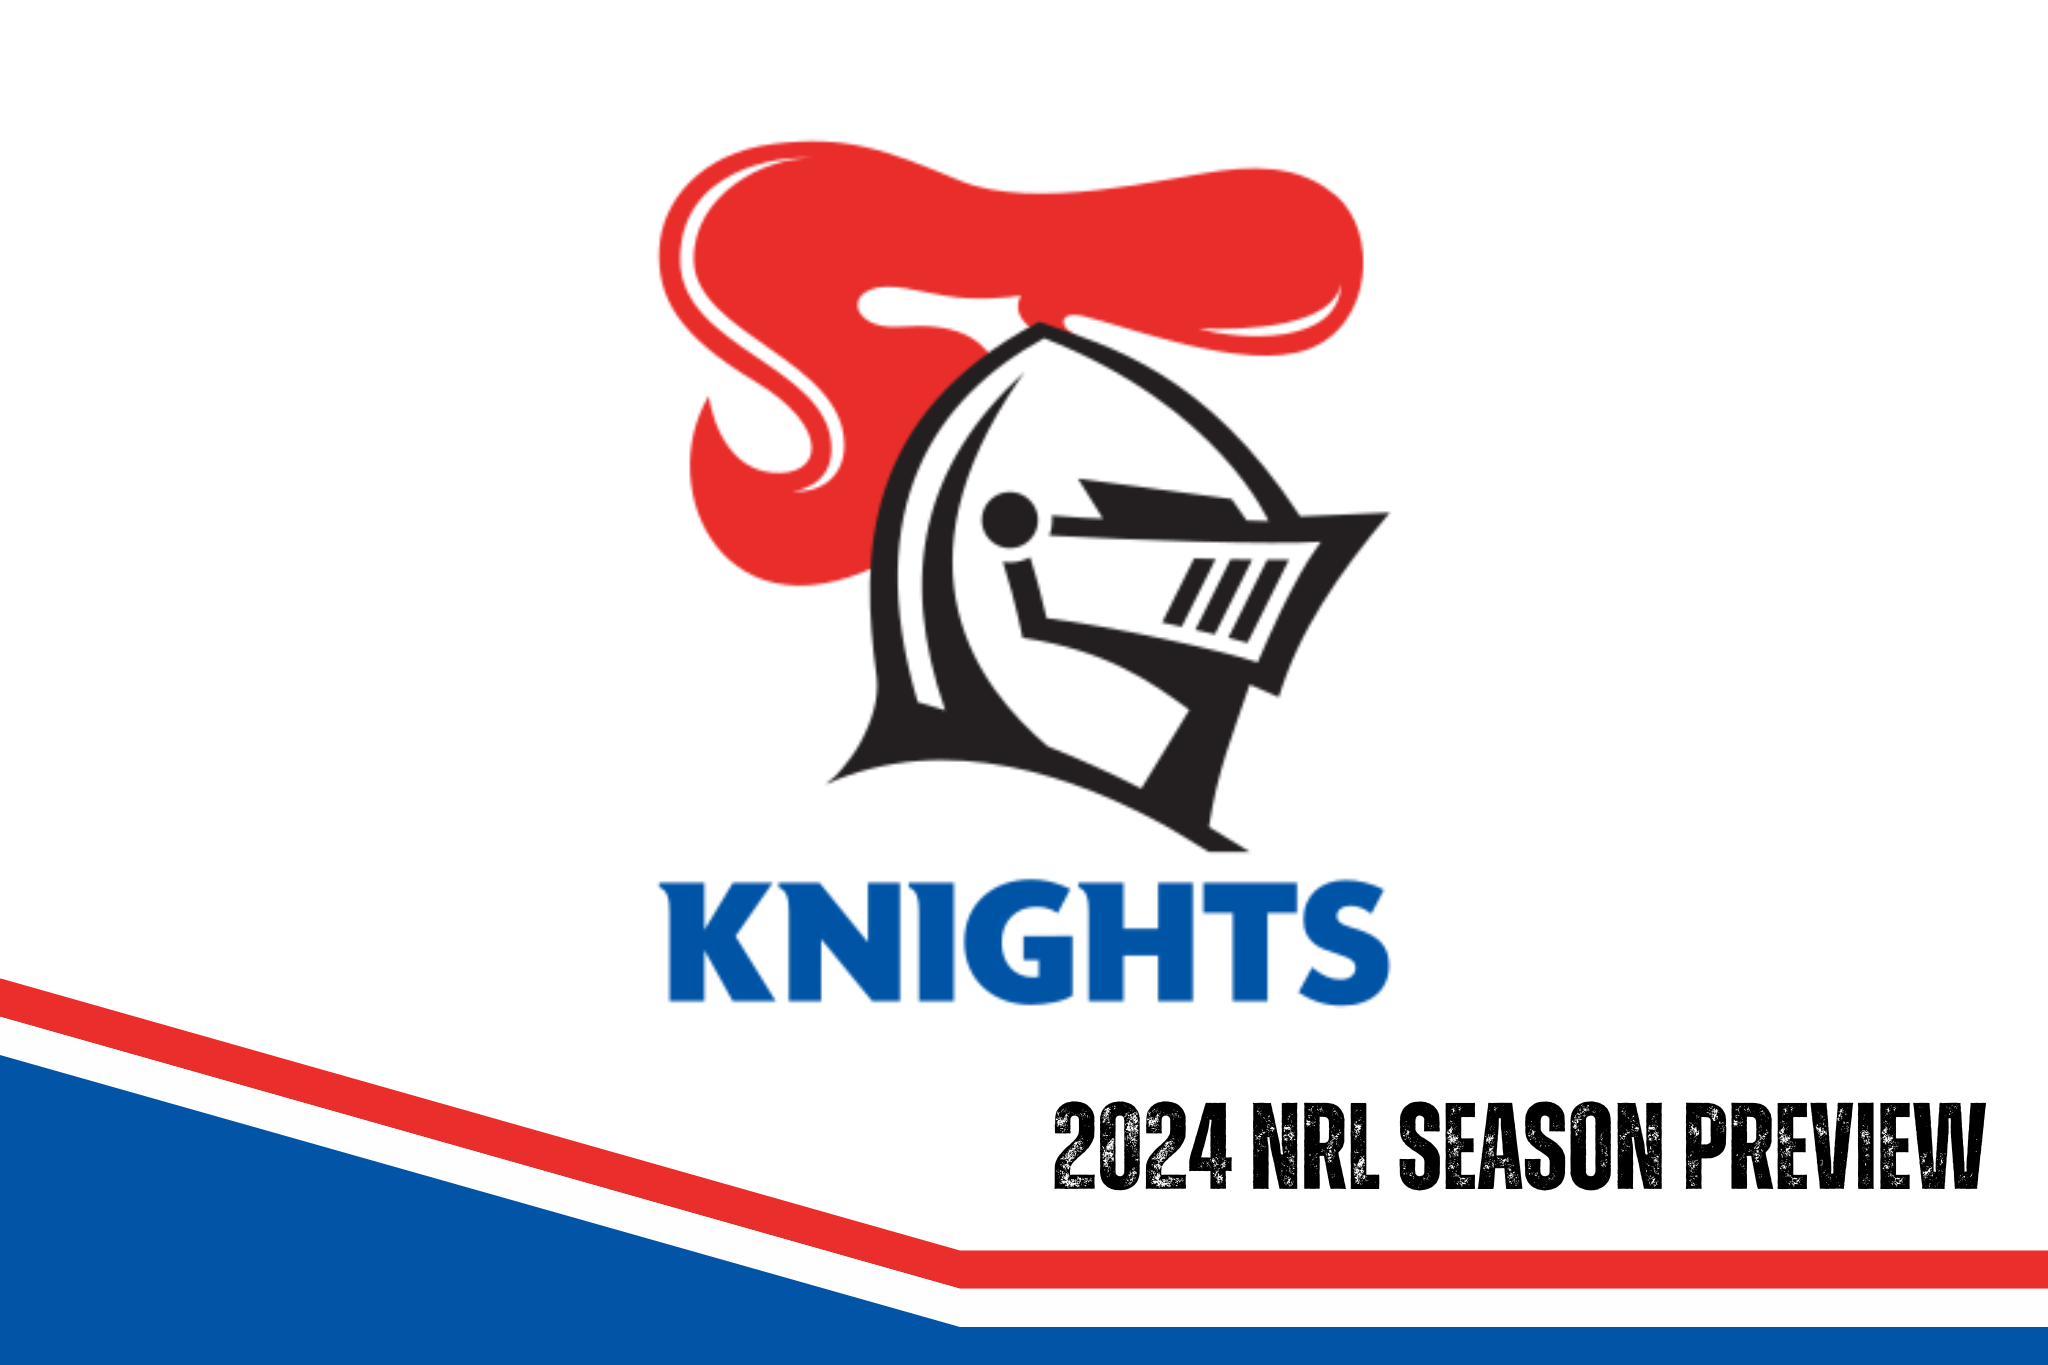 Newcastle Knights 2024 season preview